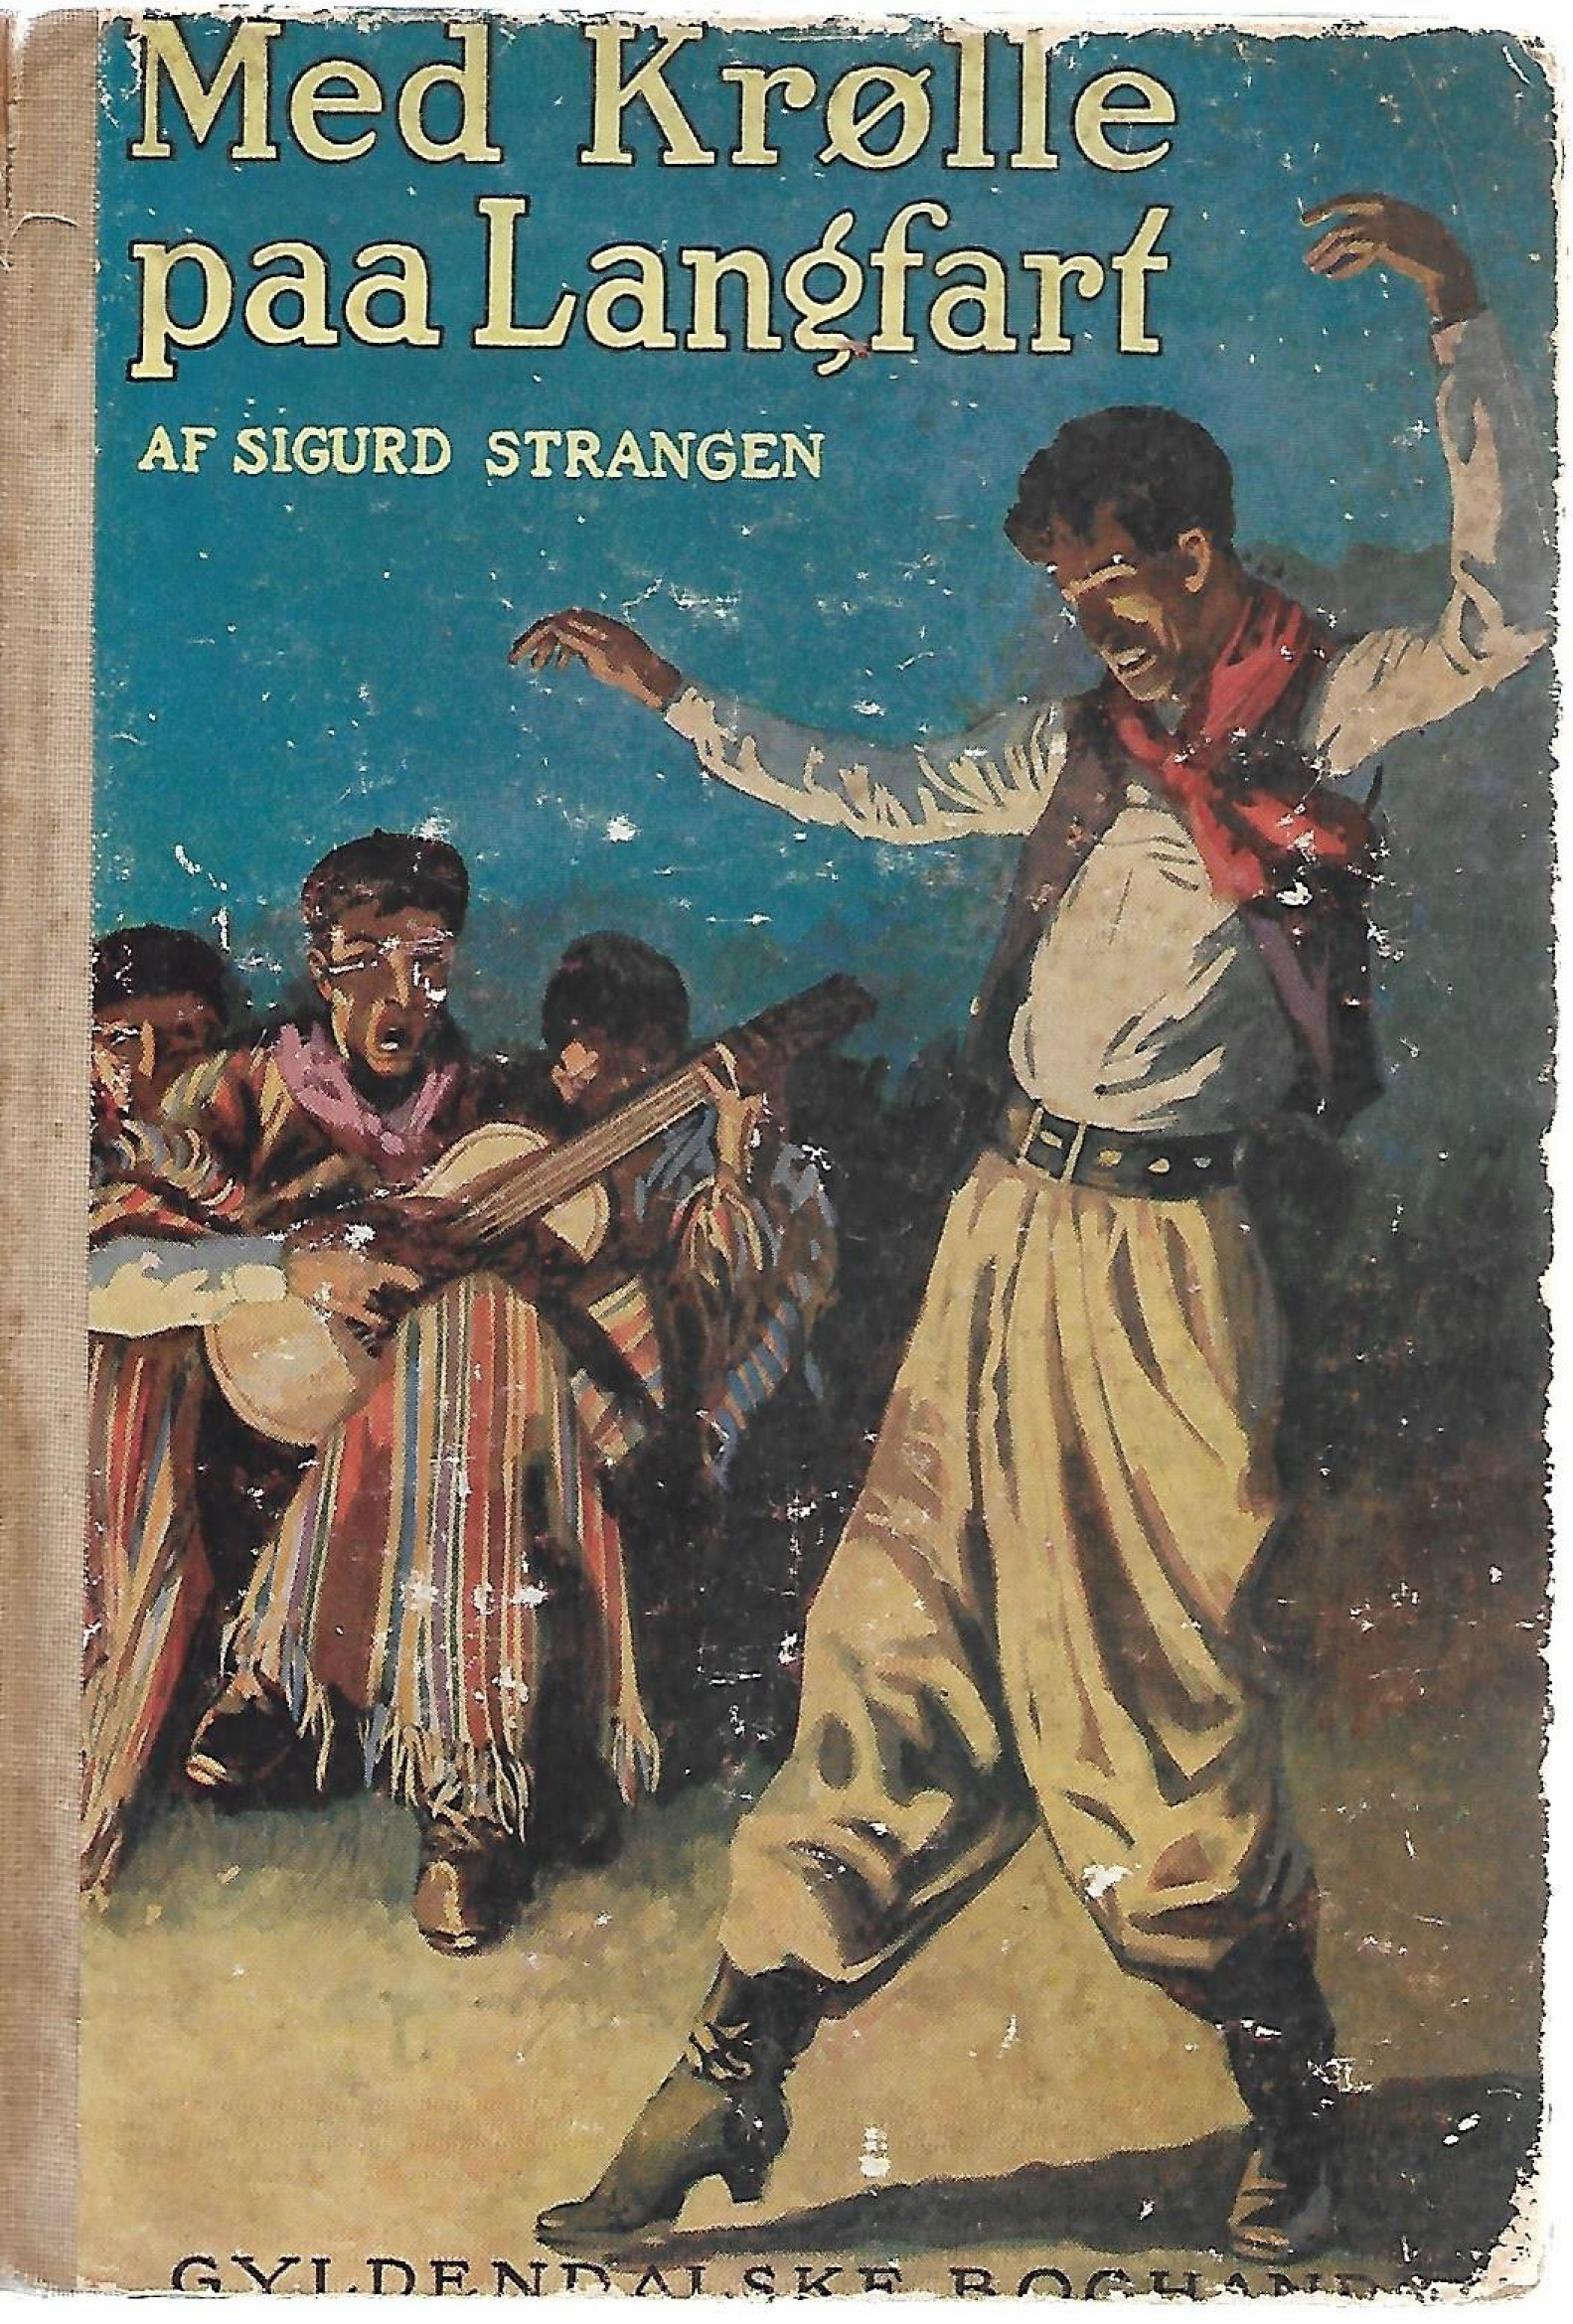 Med Krølle paa langfart - Sigurd Strangen-1